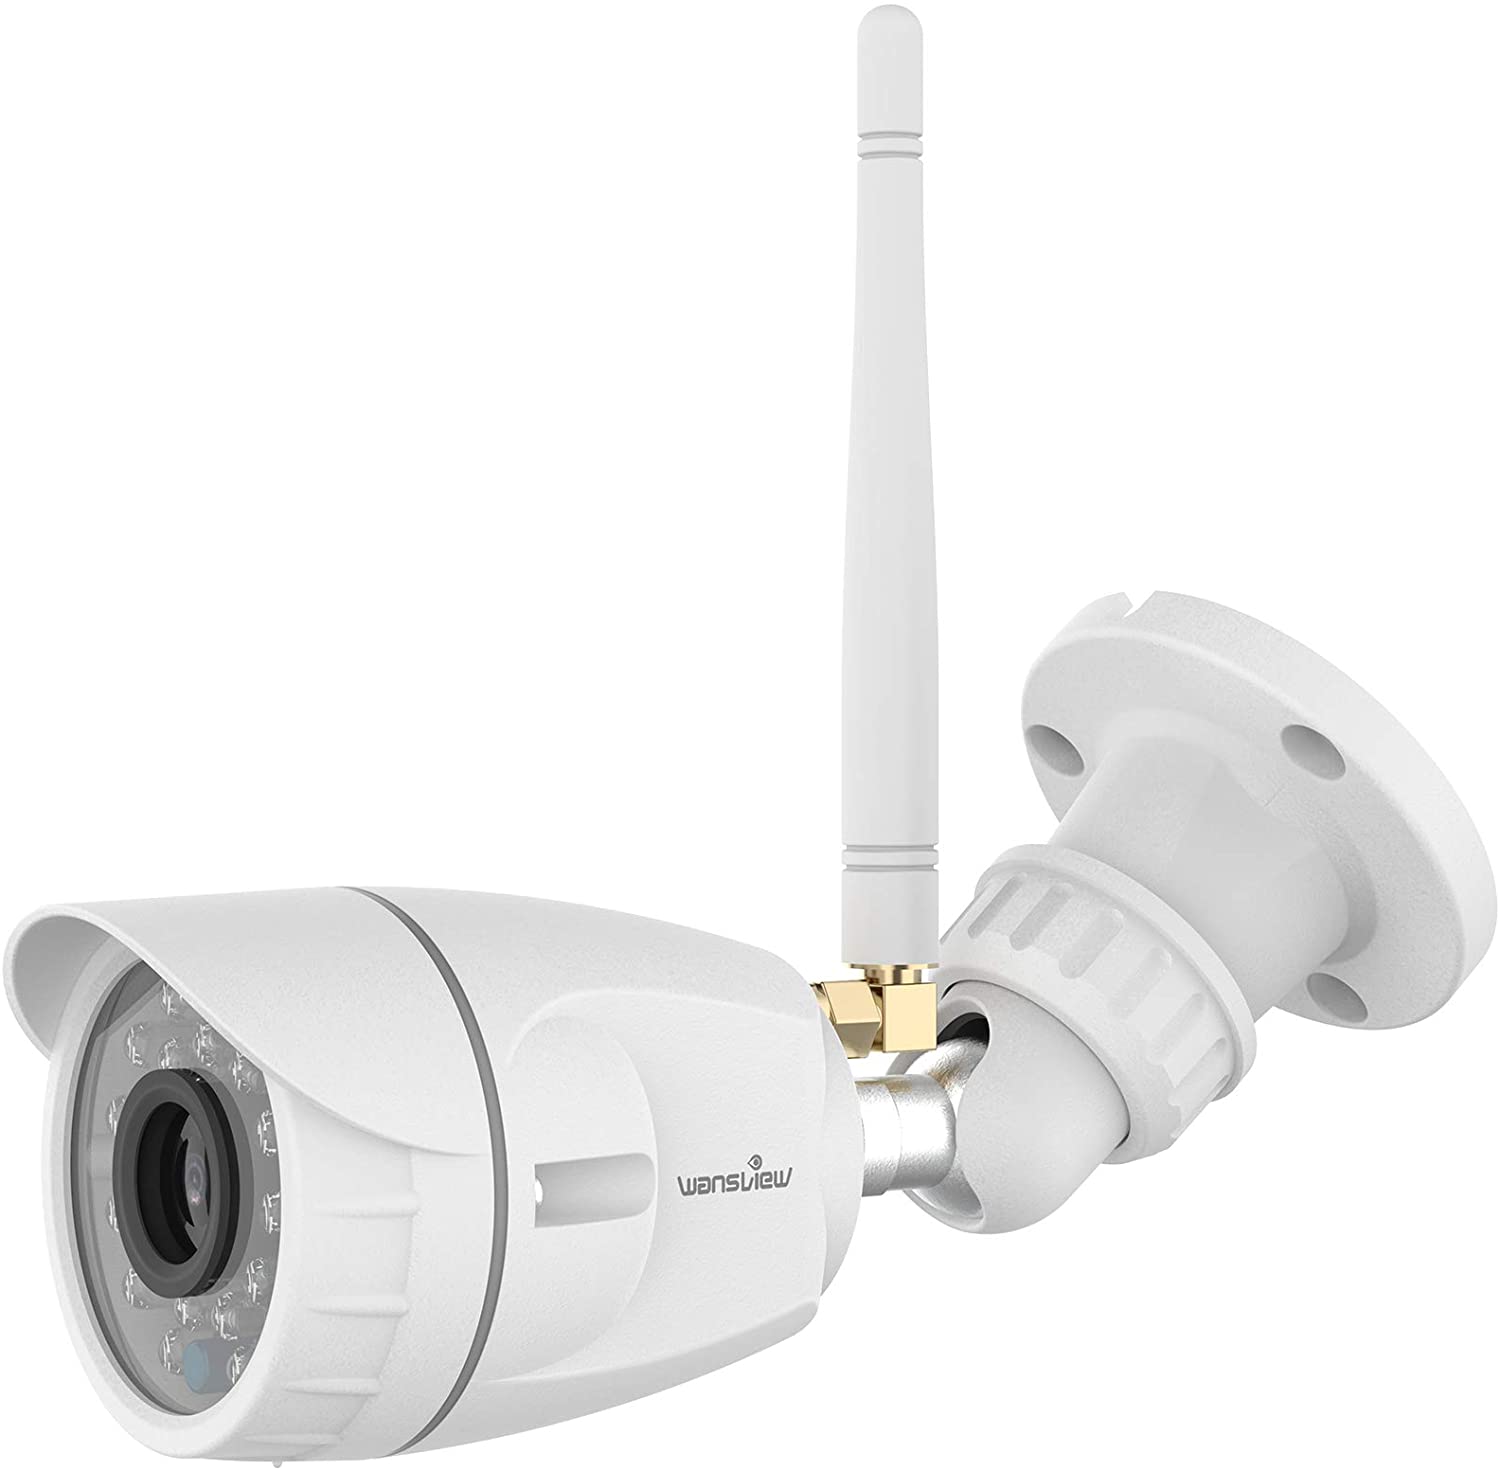 Wansview1080P Wireless WiFi Home Surveillance Waterproof Camera W4 (Black/White) $18.39 + Free Shipping